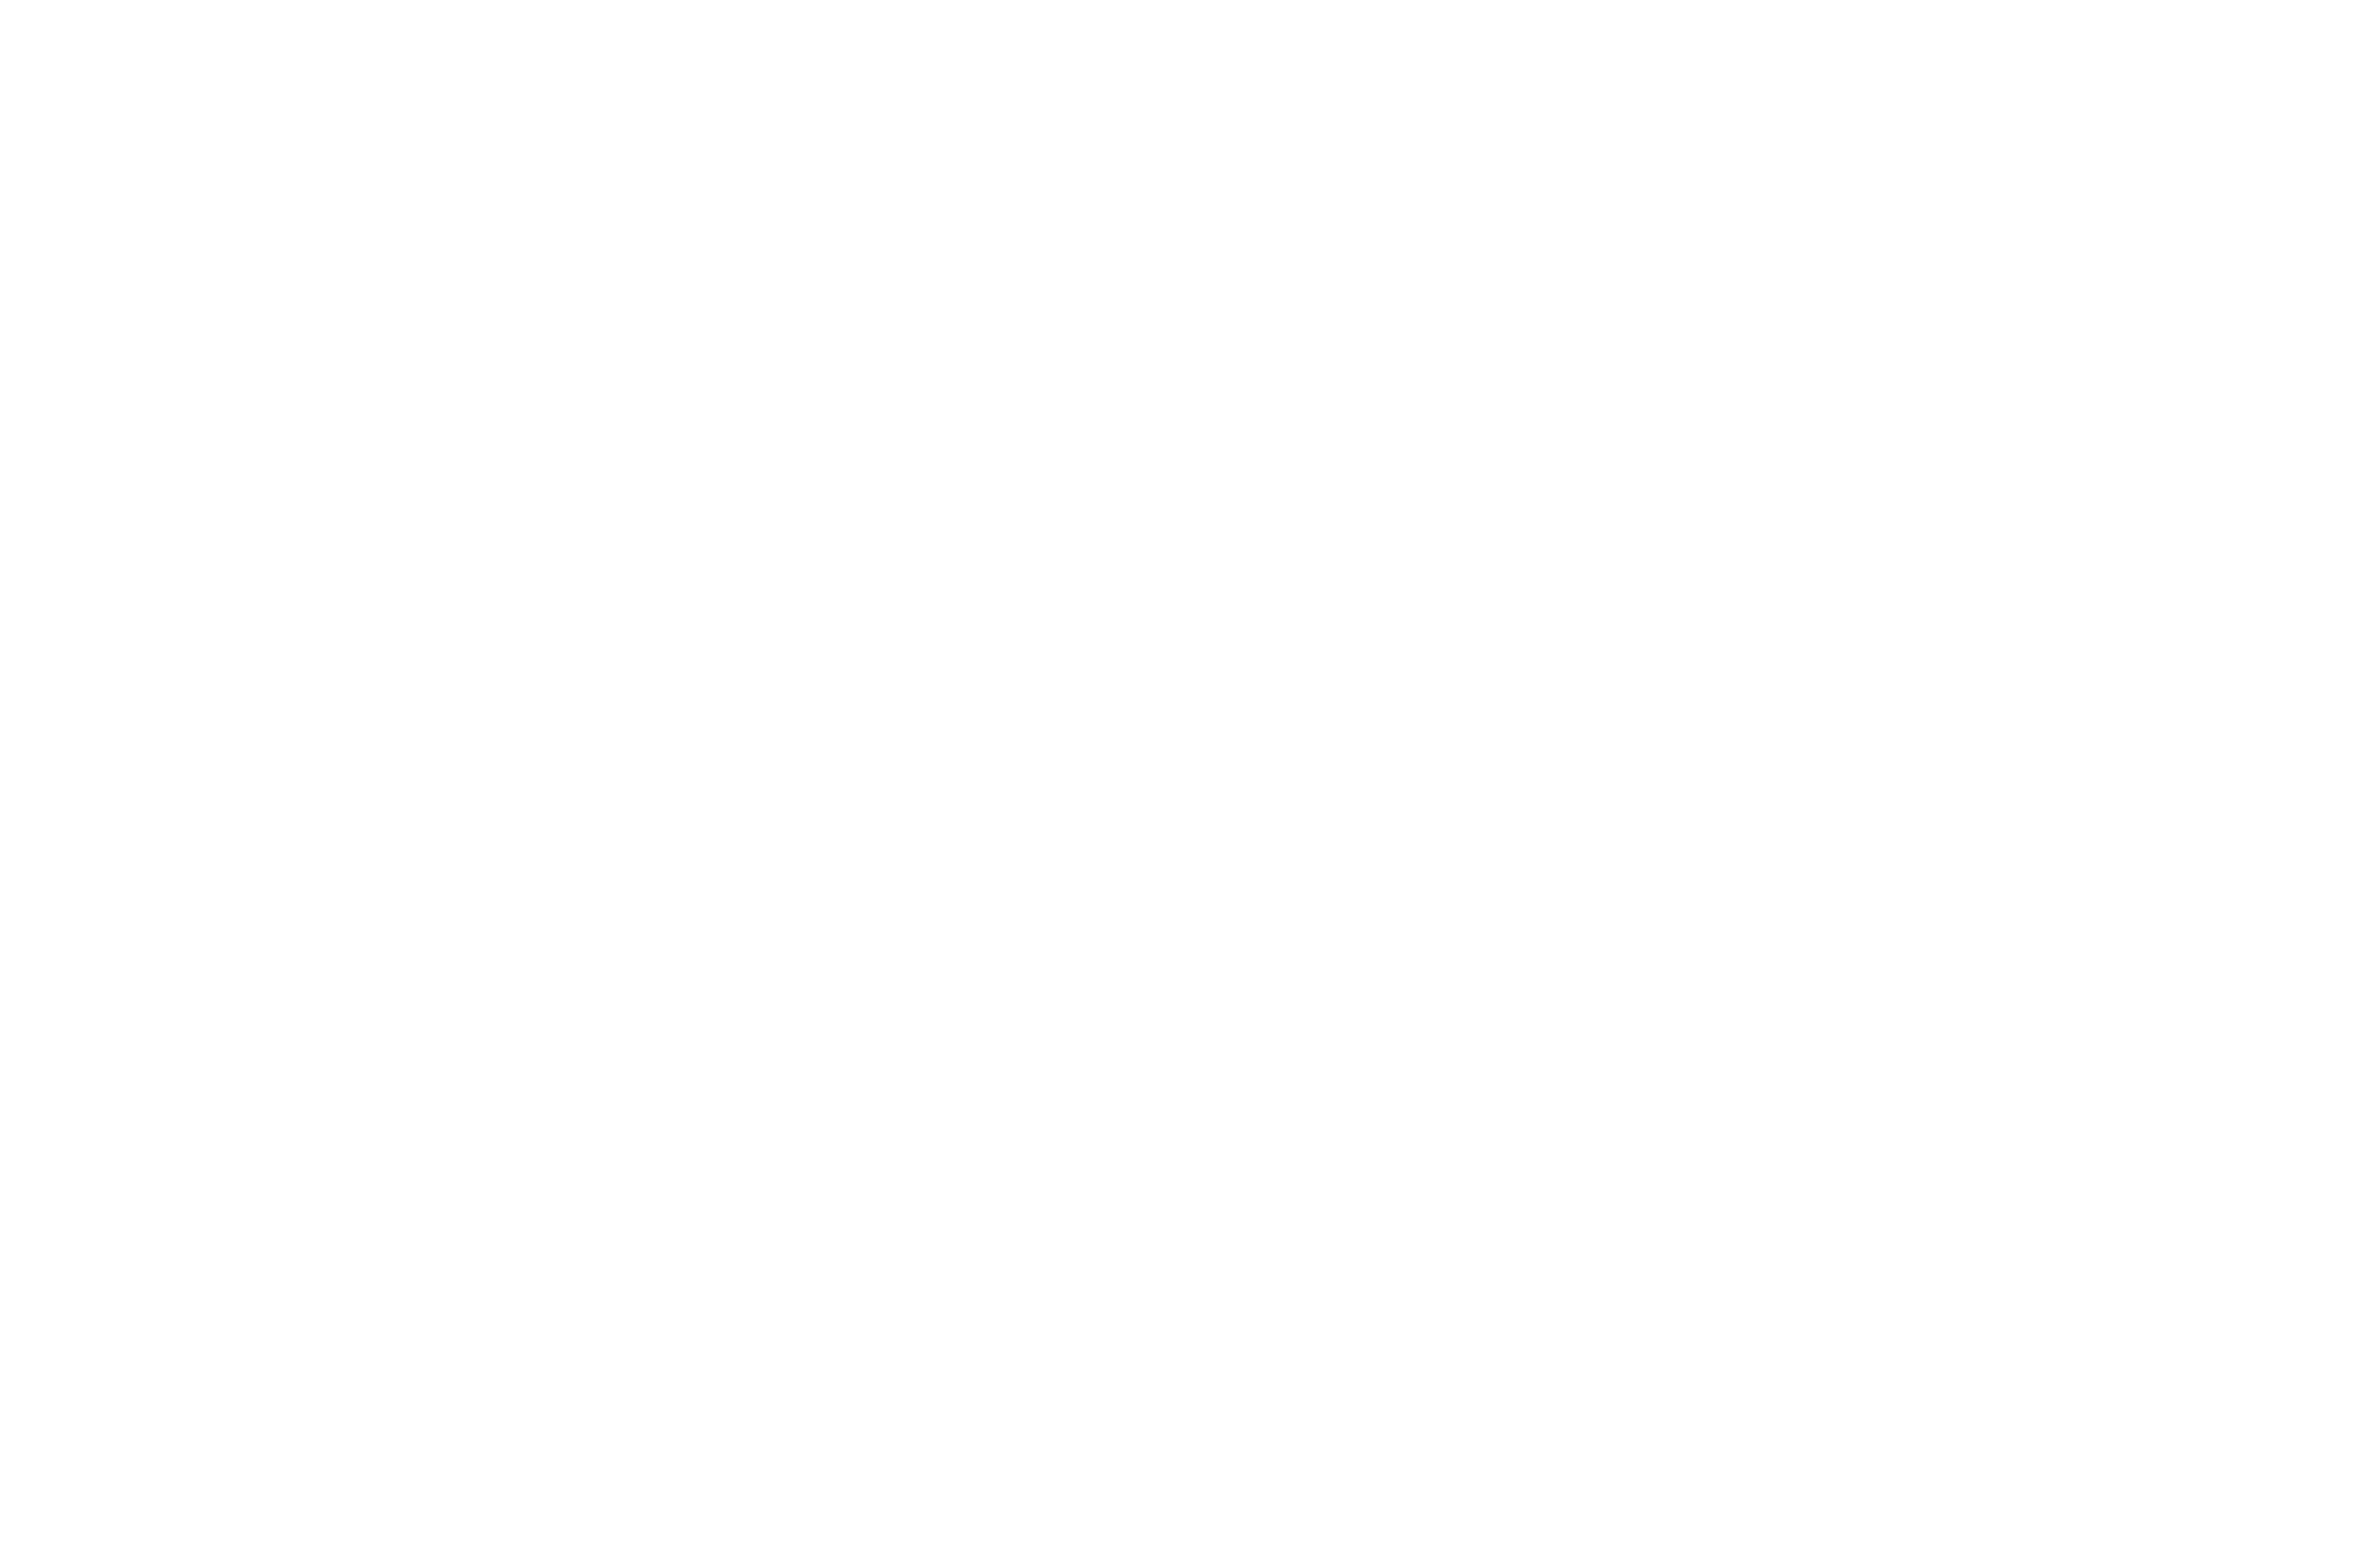 Stadsvilla Sonsbeek logo